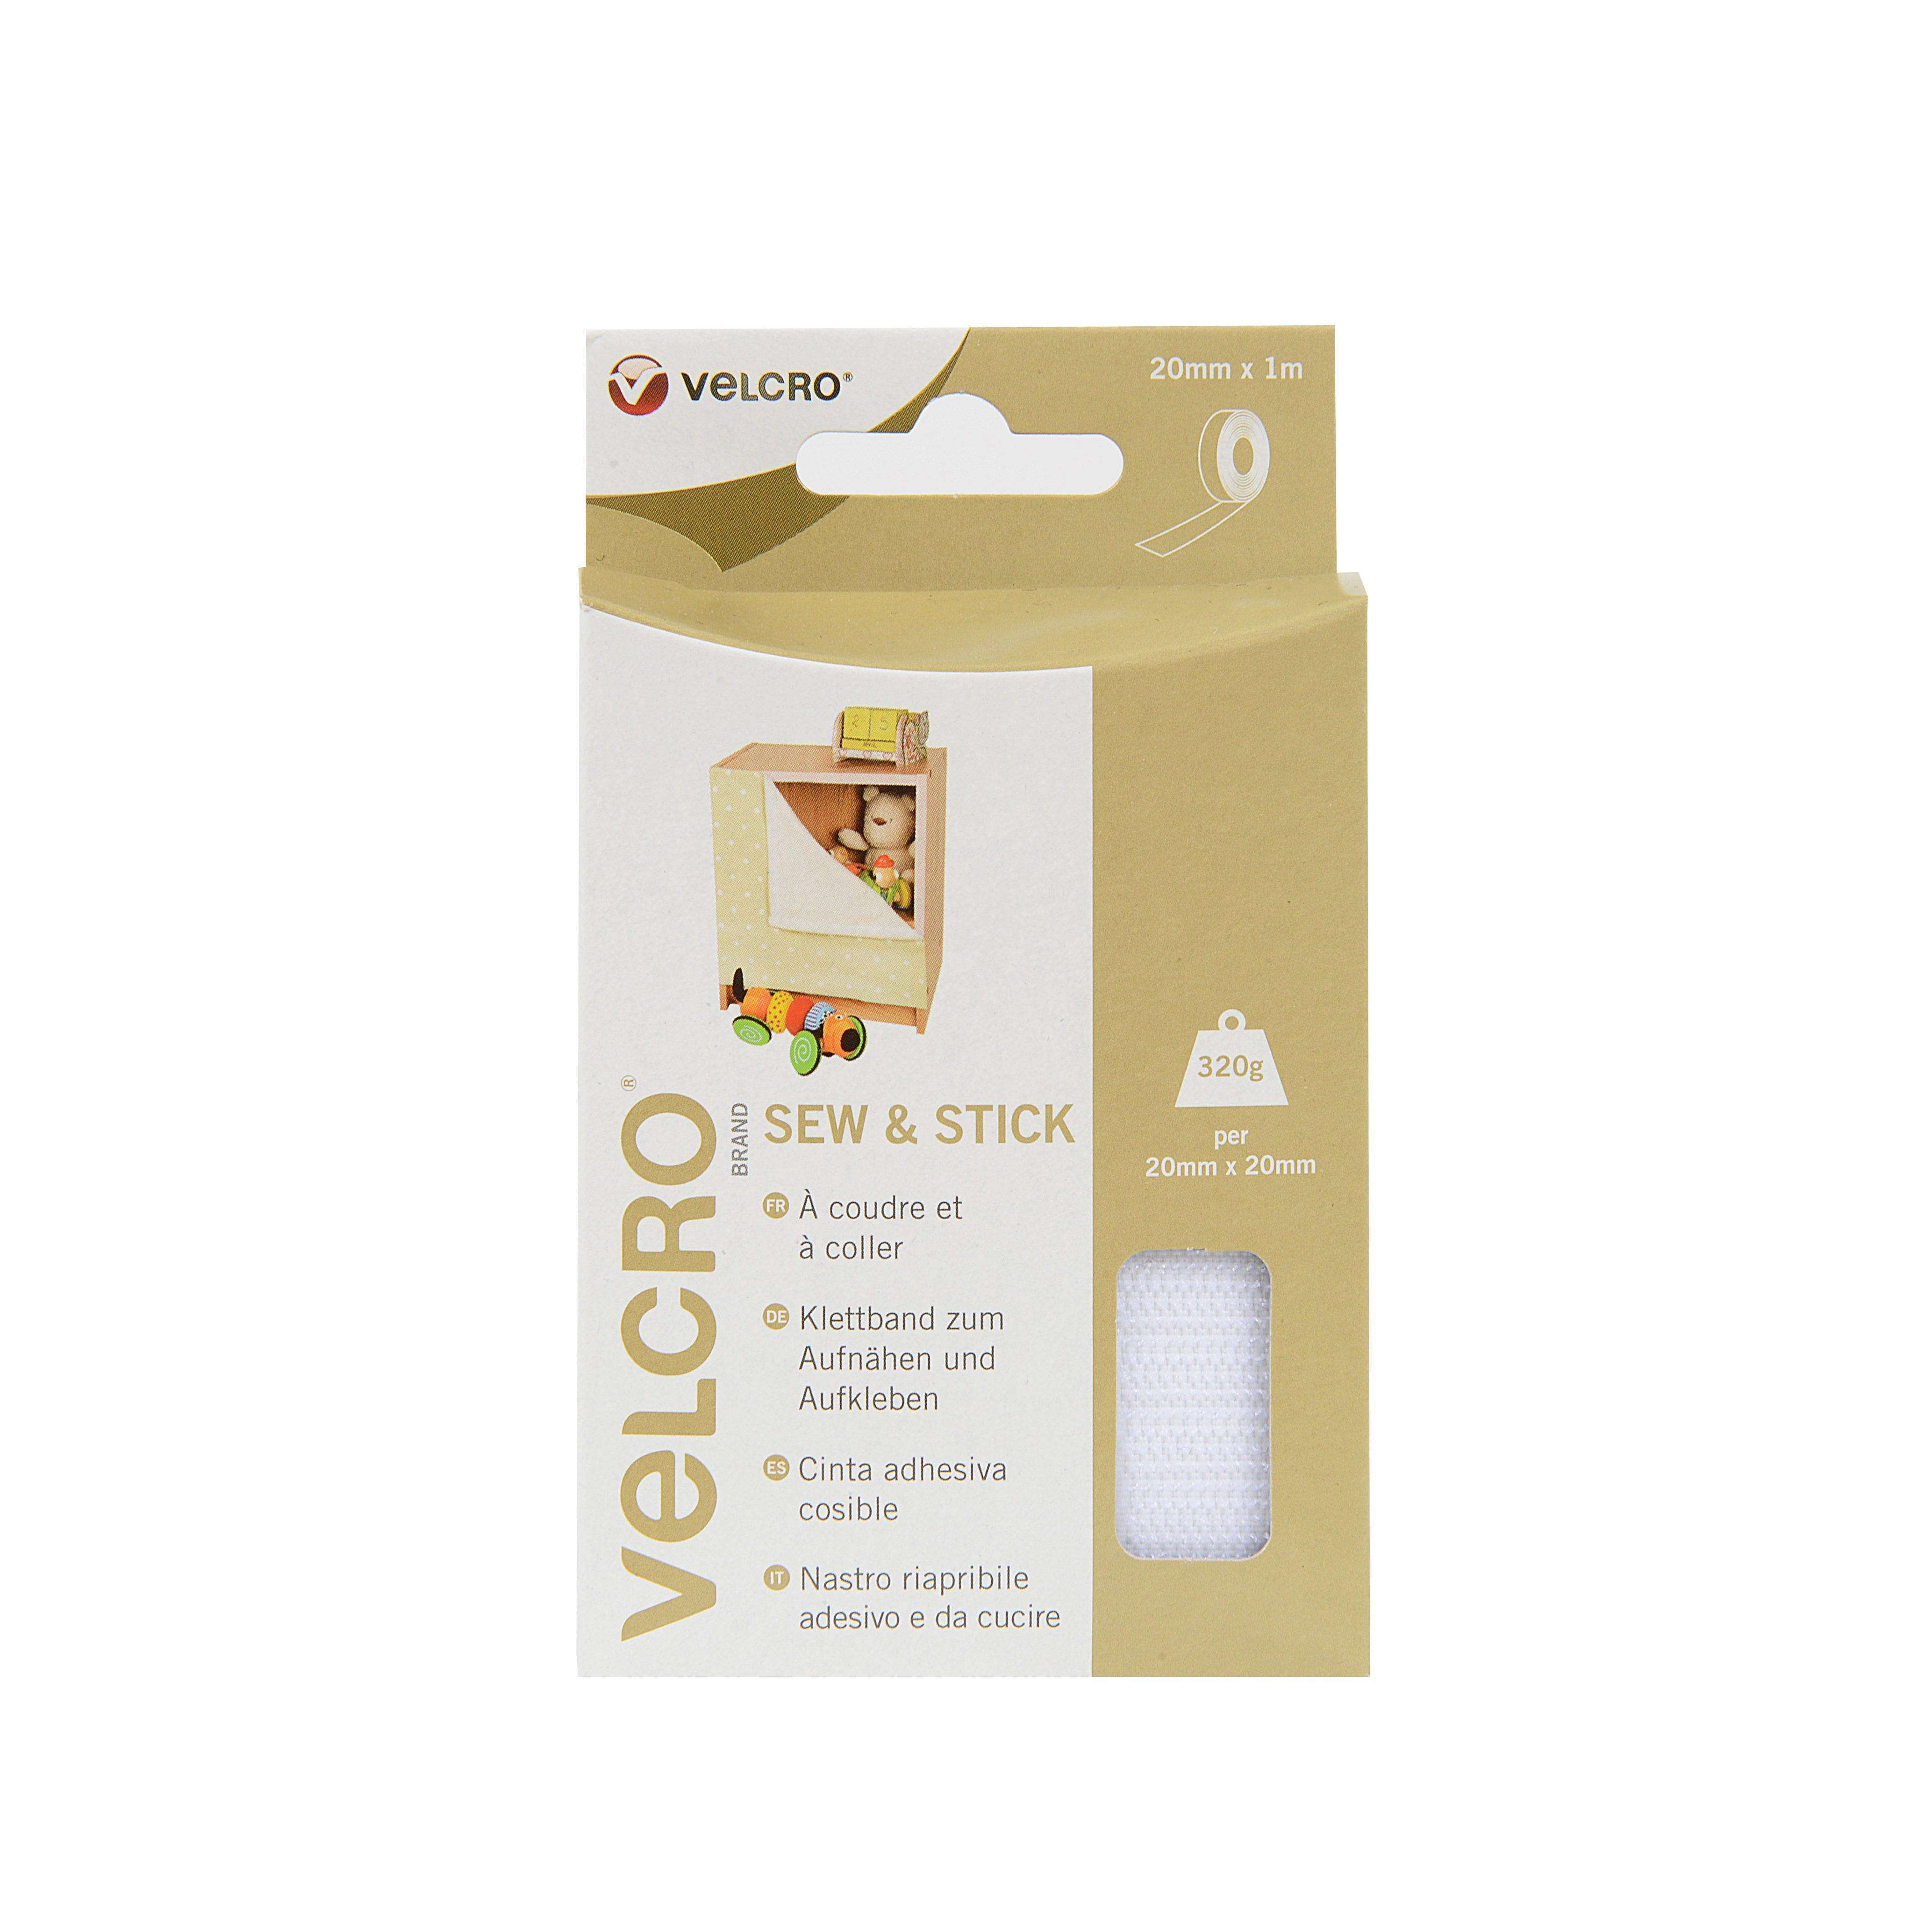 VELCRO Brand - VELCRO Brand Stick On Tape 20mm x 1m White